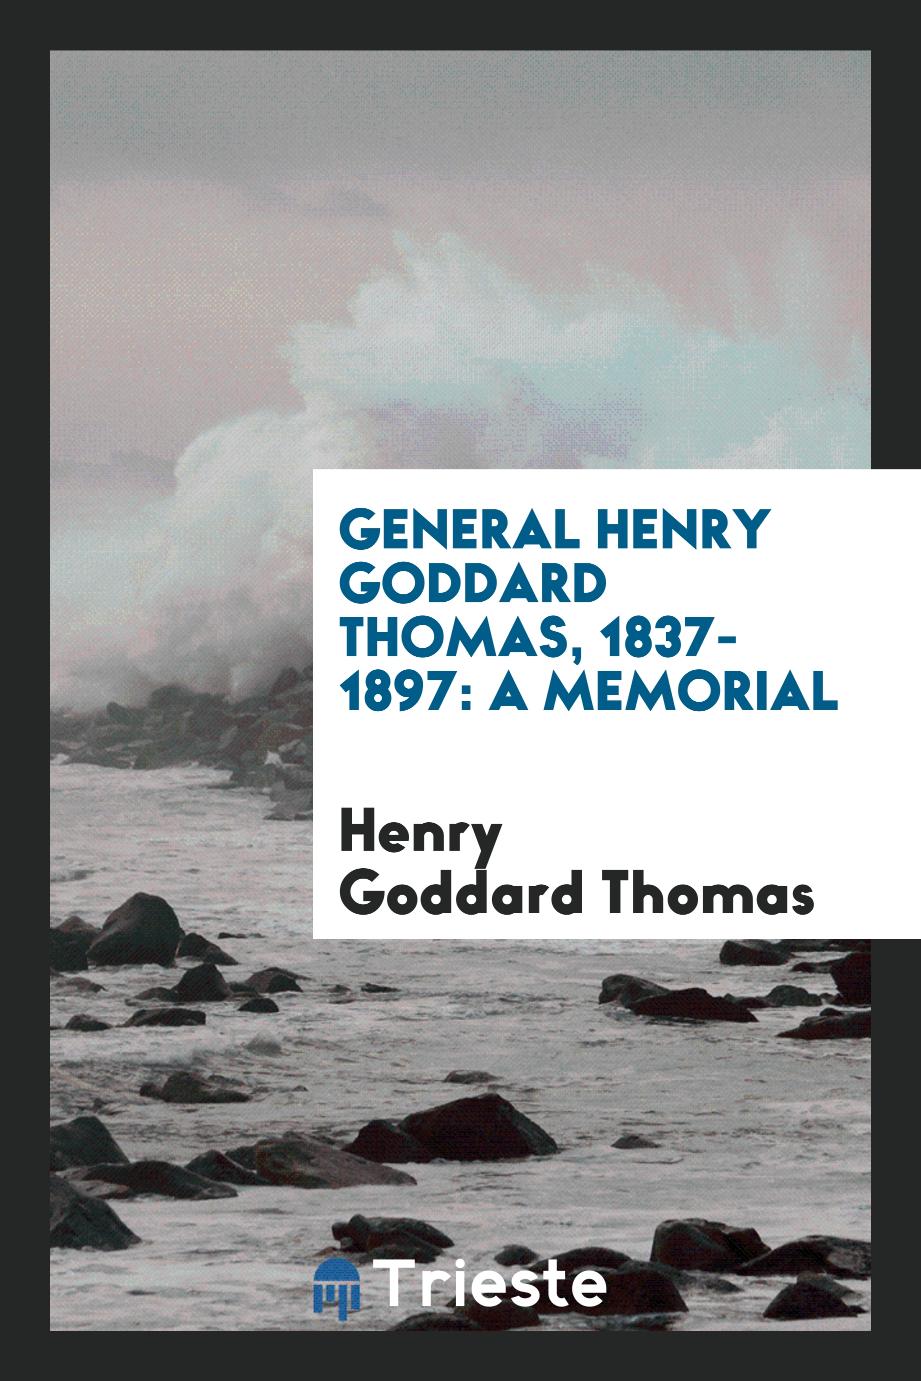 General Henry Goddard Thomas, 1837-1897: a memorial